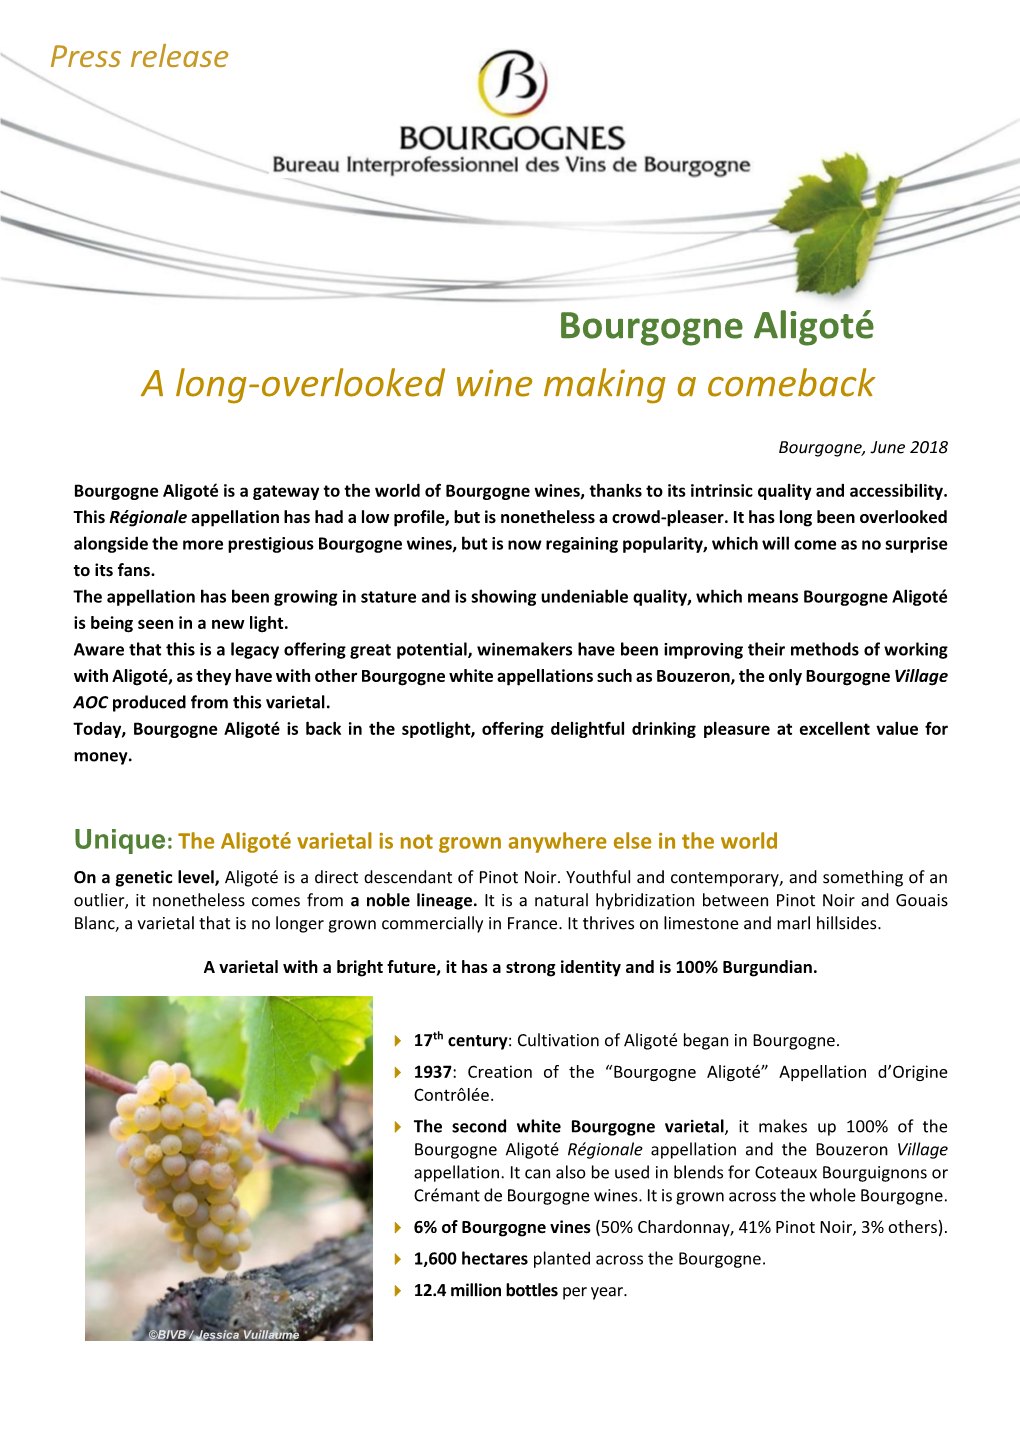 About Bourgogne Aligoté